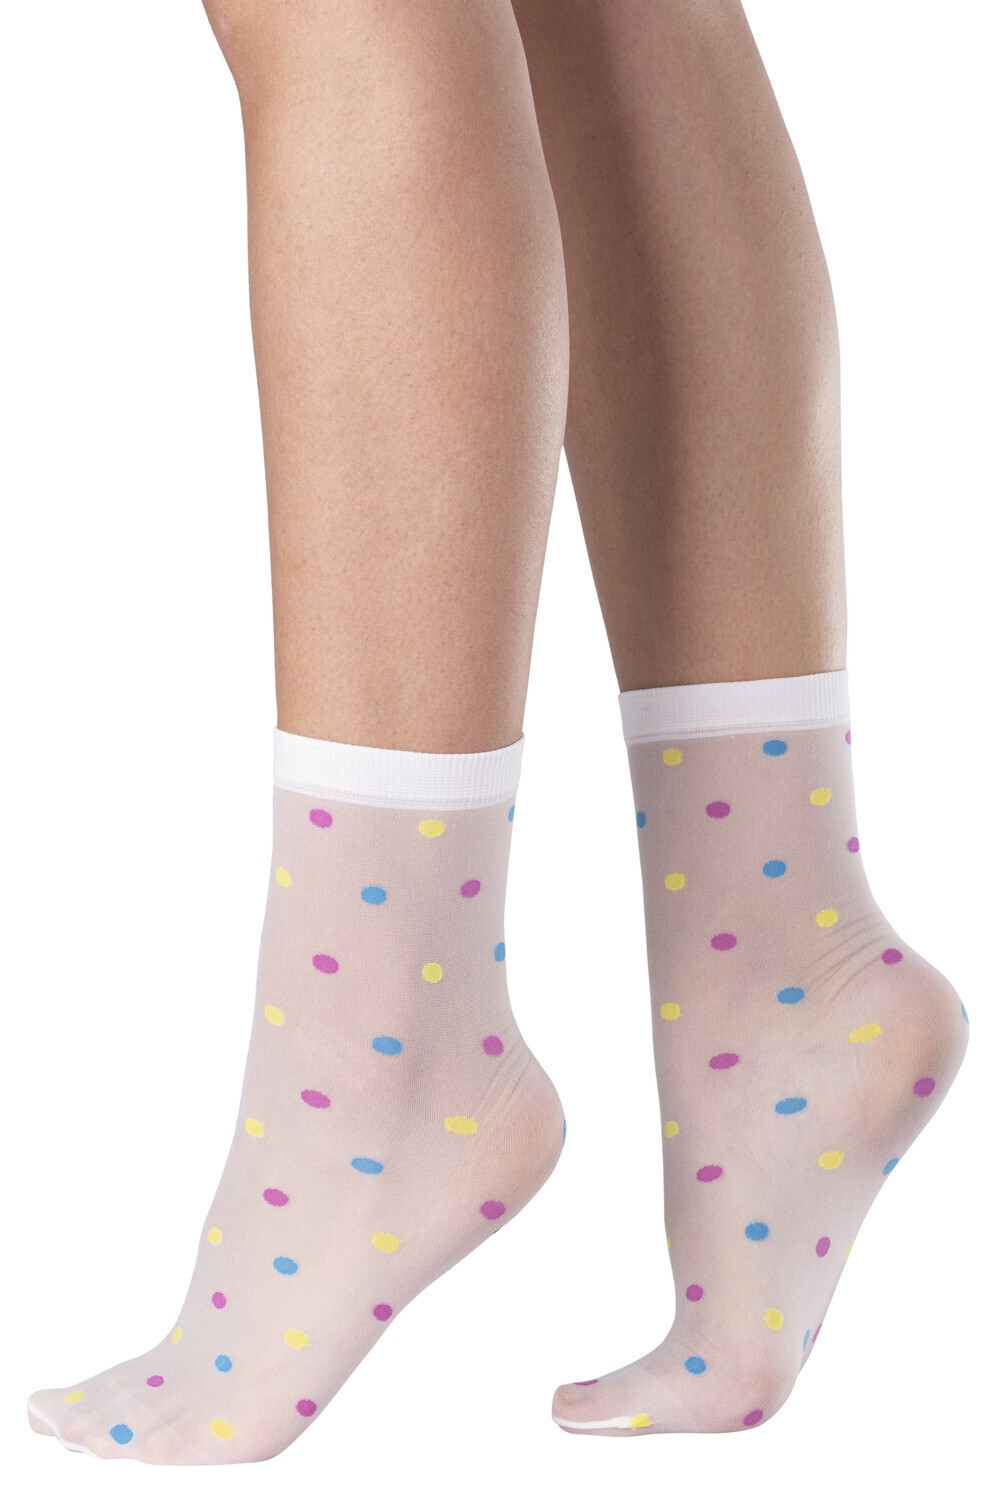 Multi color dotted socks